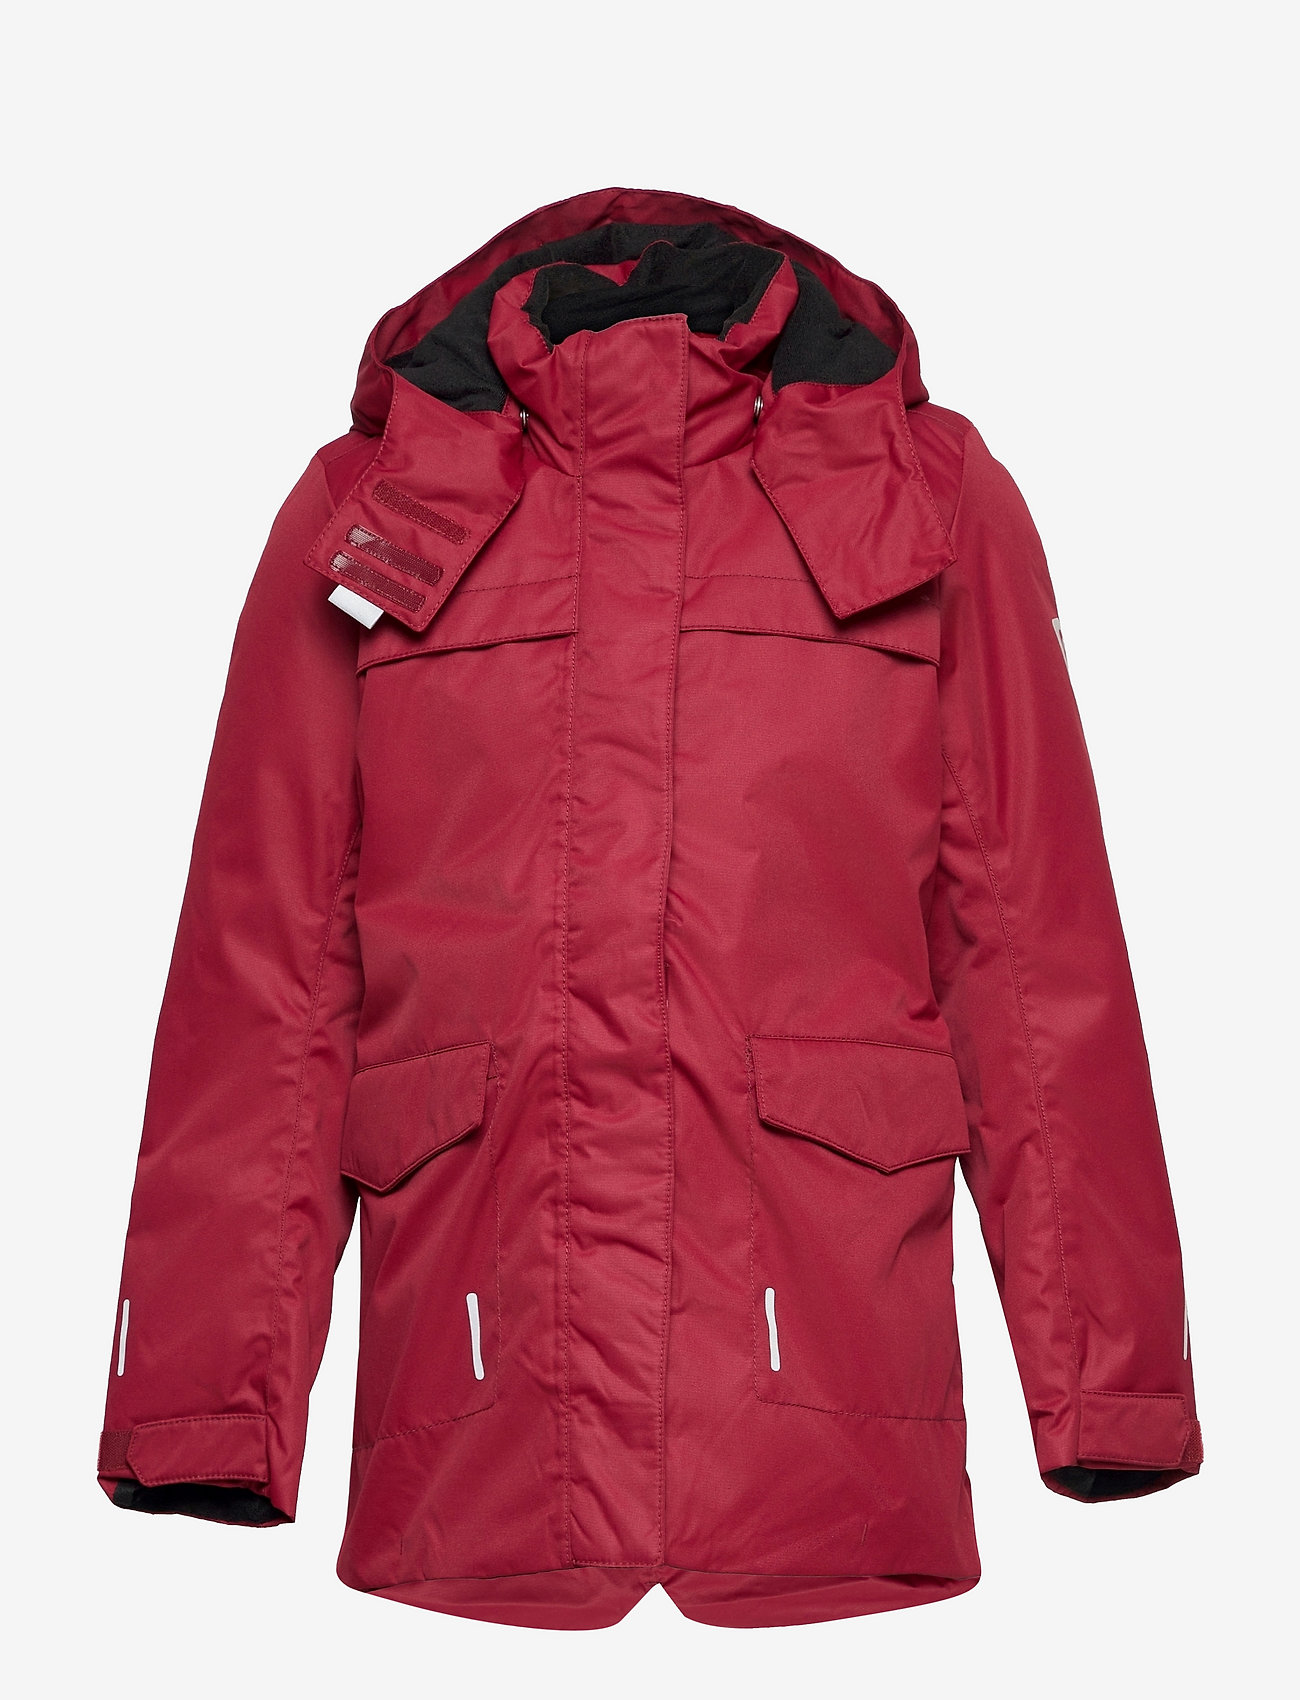 Reima - Reimatec winter jacket Pikkuserkku - parkad - jam red - 0